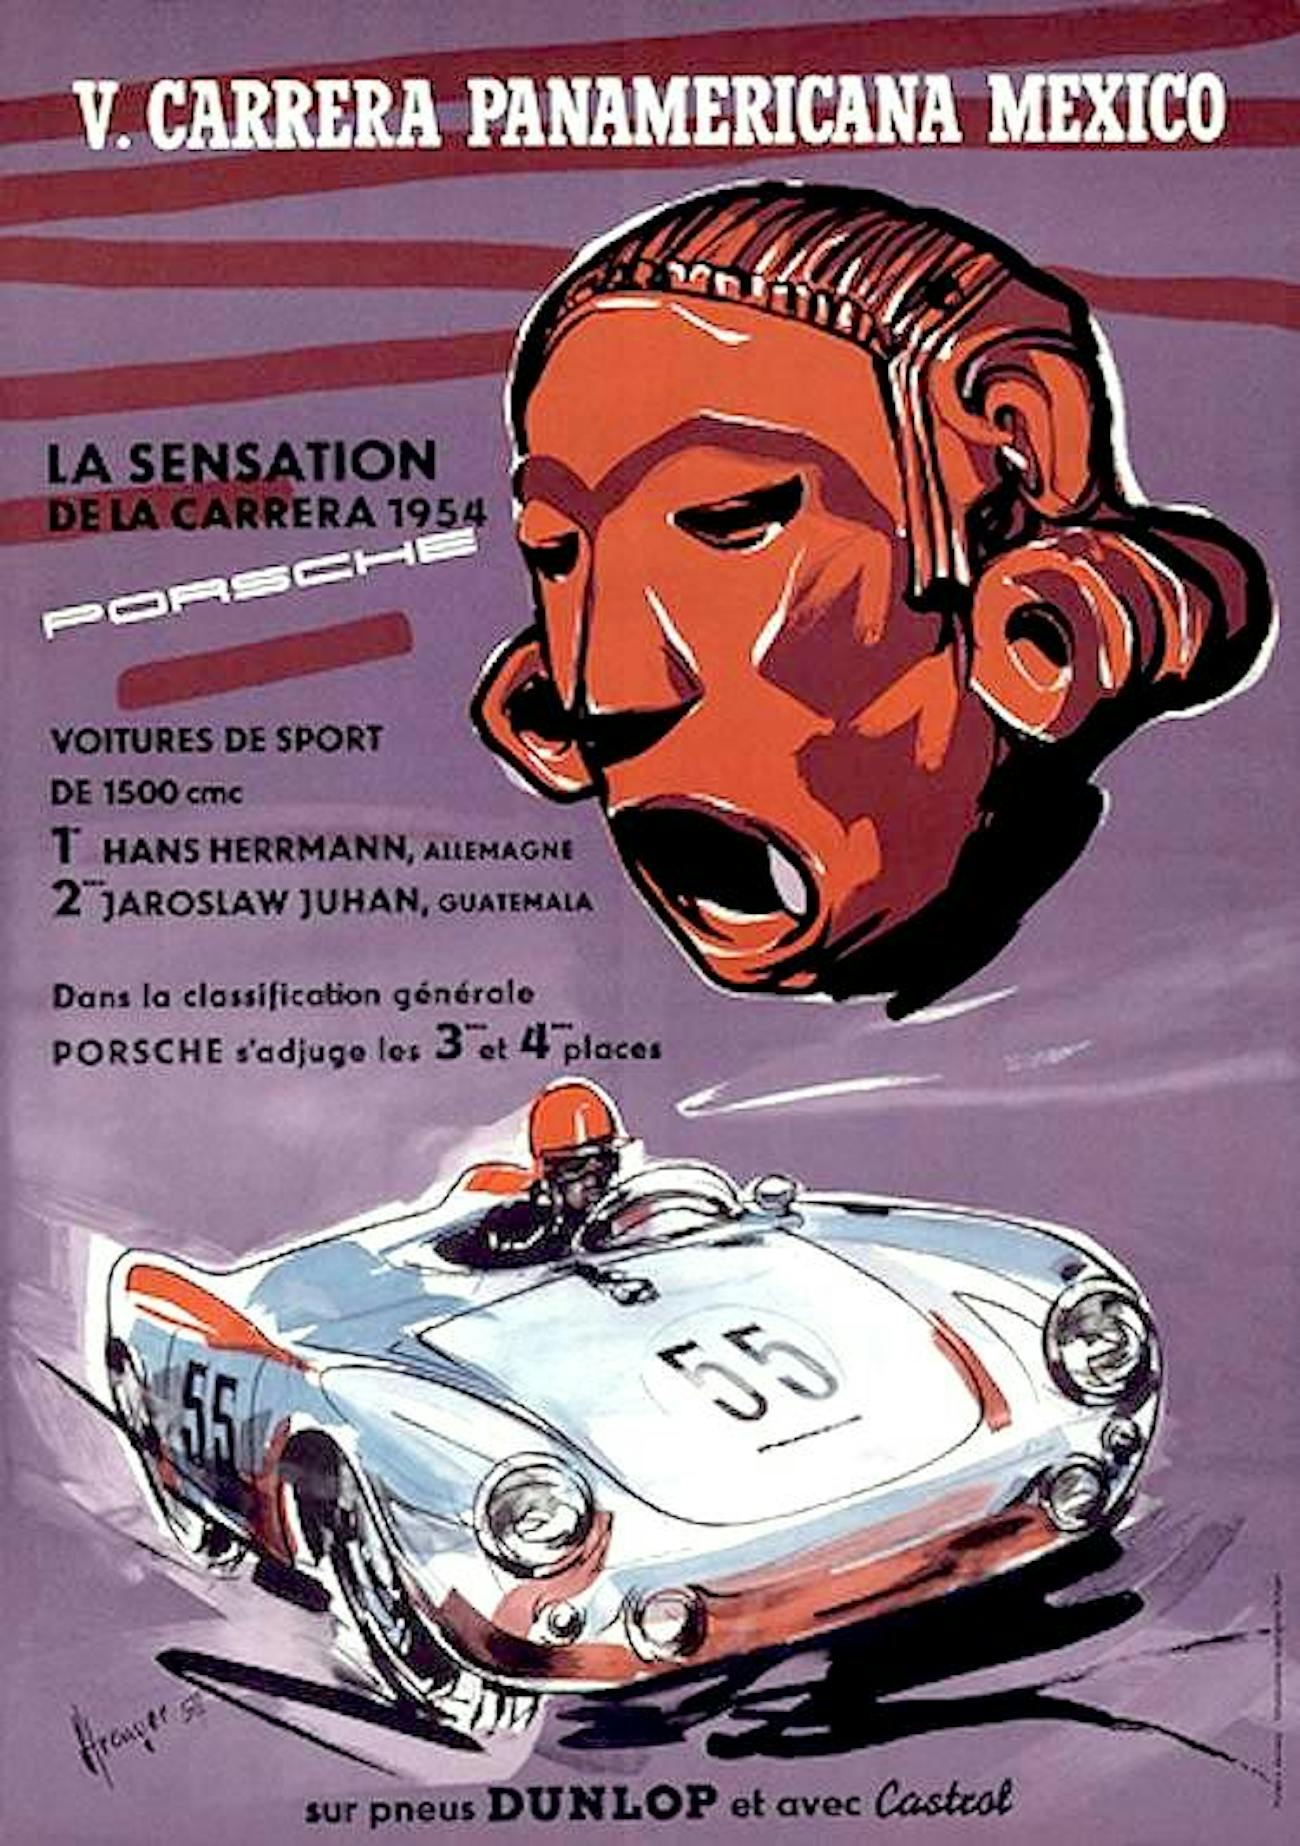 Original poster of Carrera Panamericana featuring illustration of Porsche 550